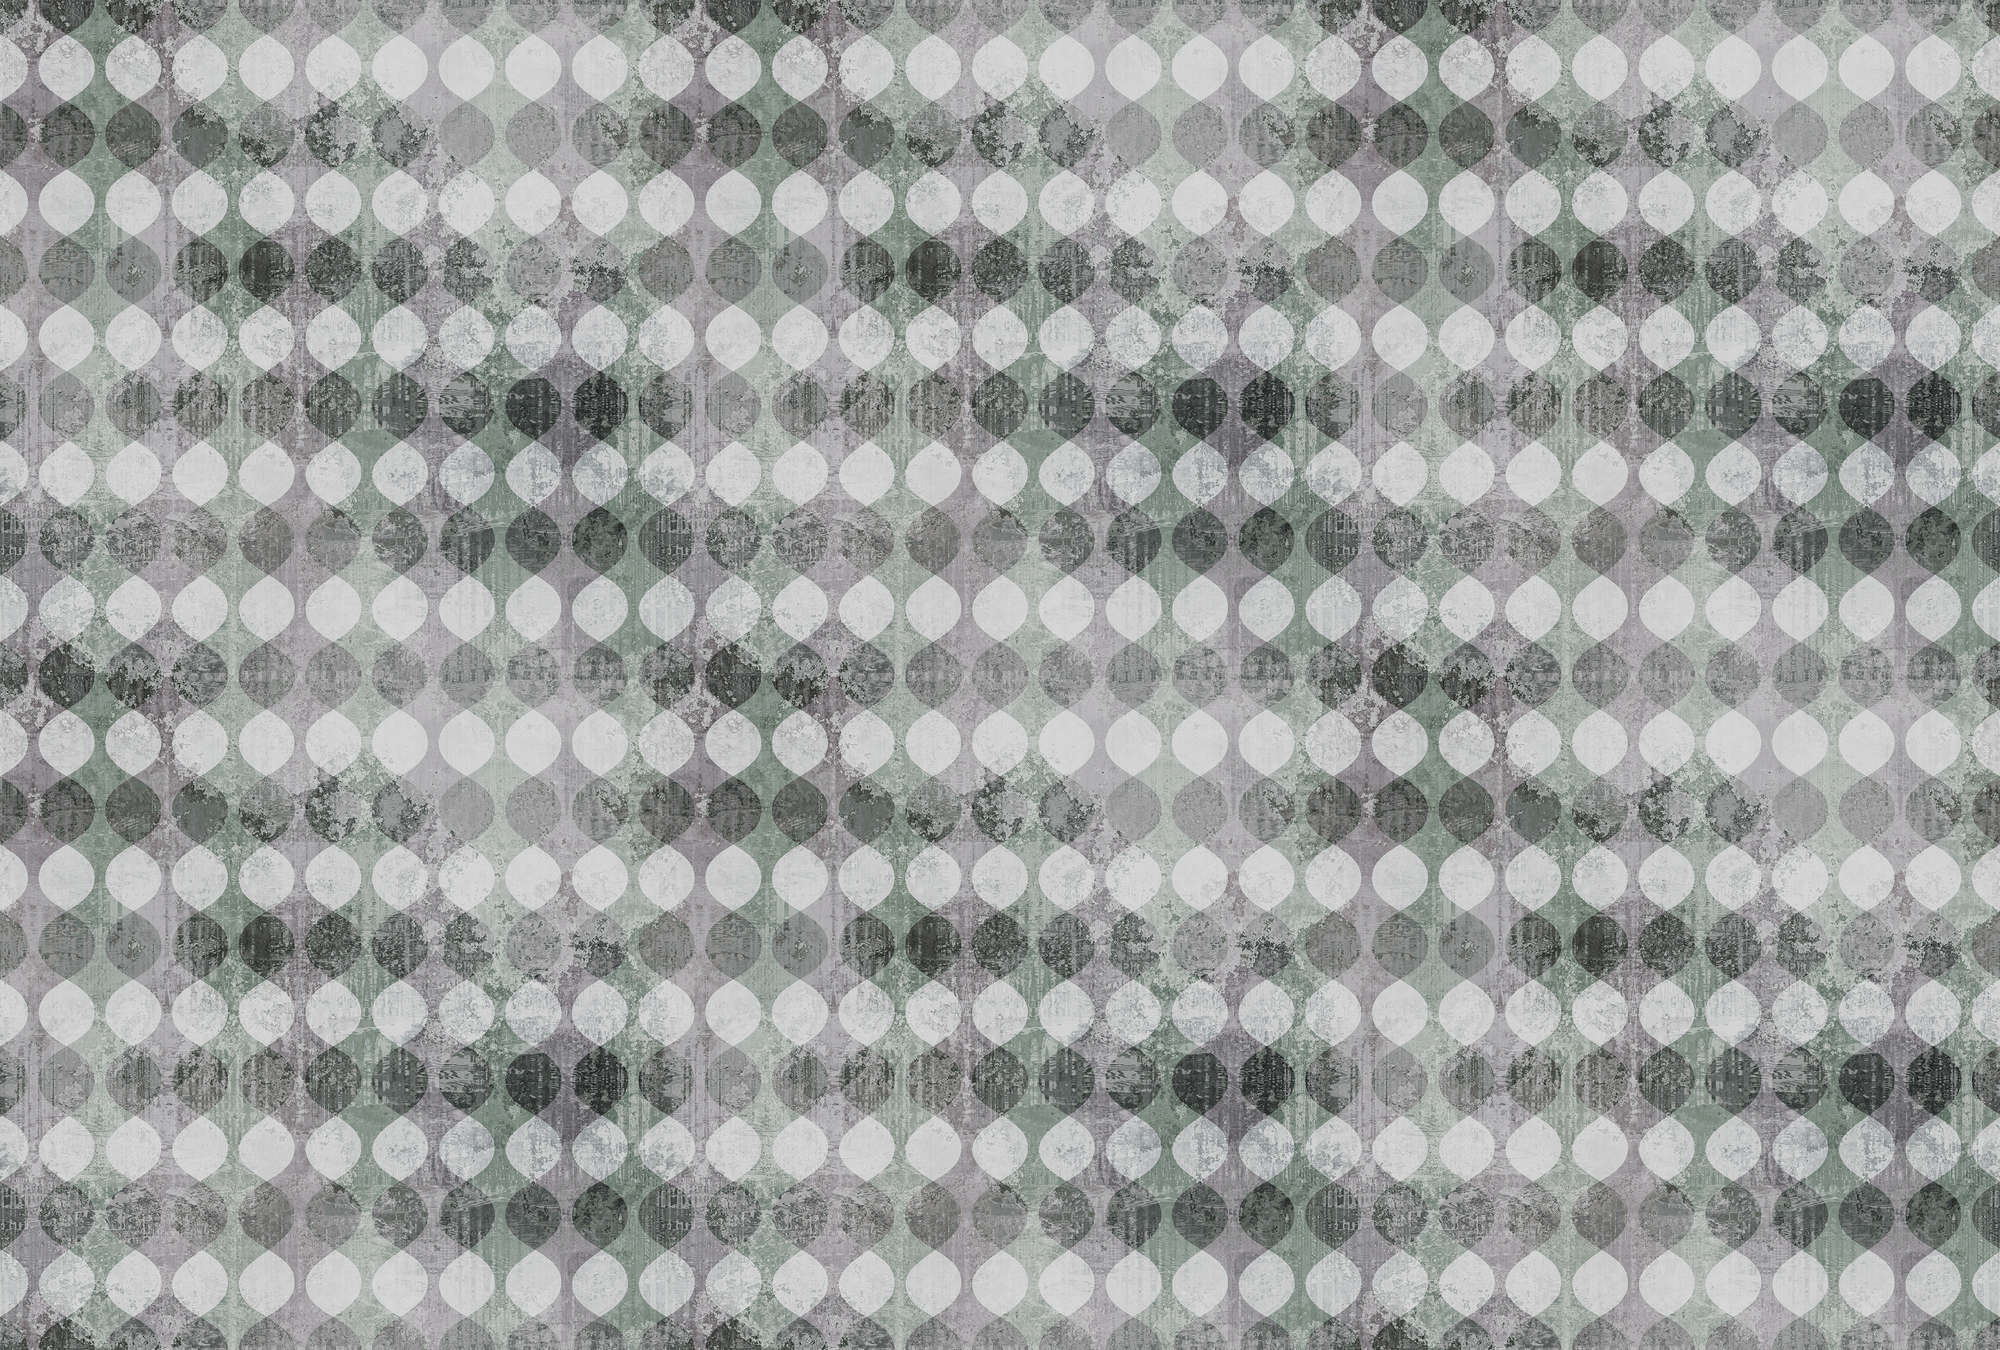             Garland 2 - 70er Jahre Retro Fototapete, Grau – Grau, Grün | Struktur Vlies
        